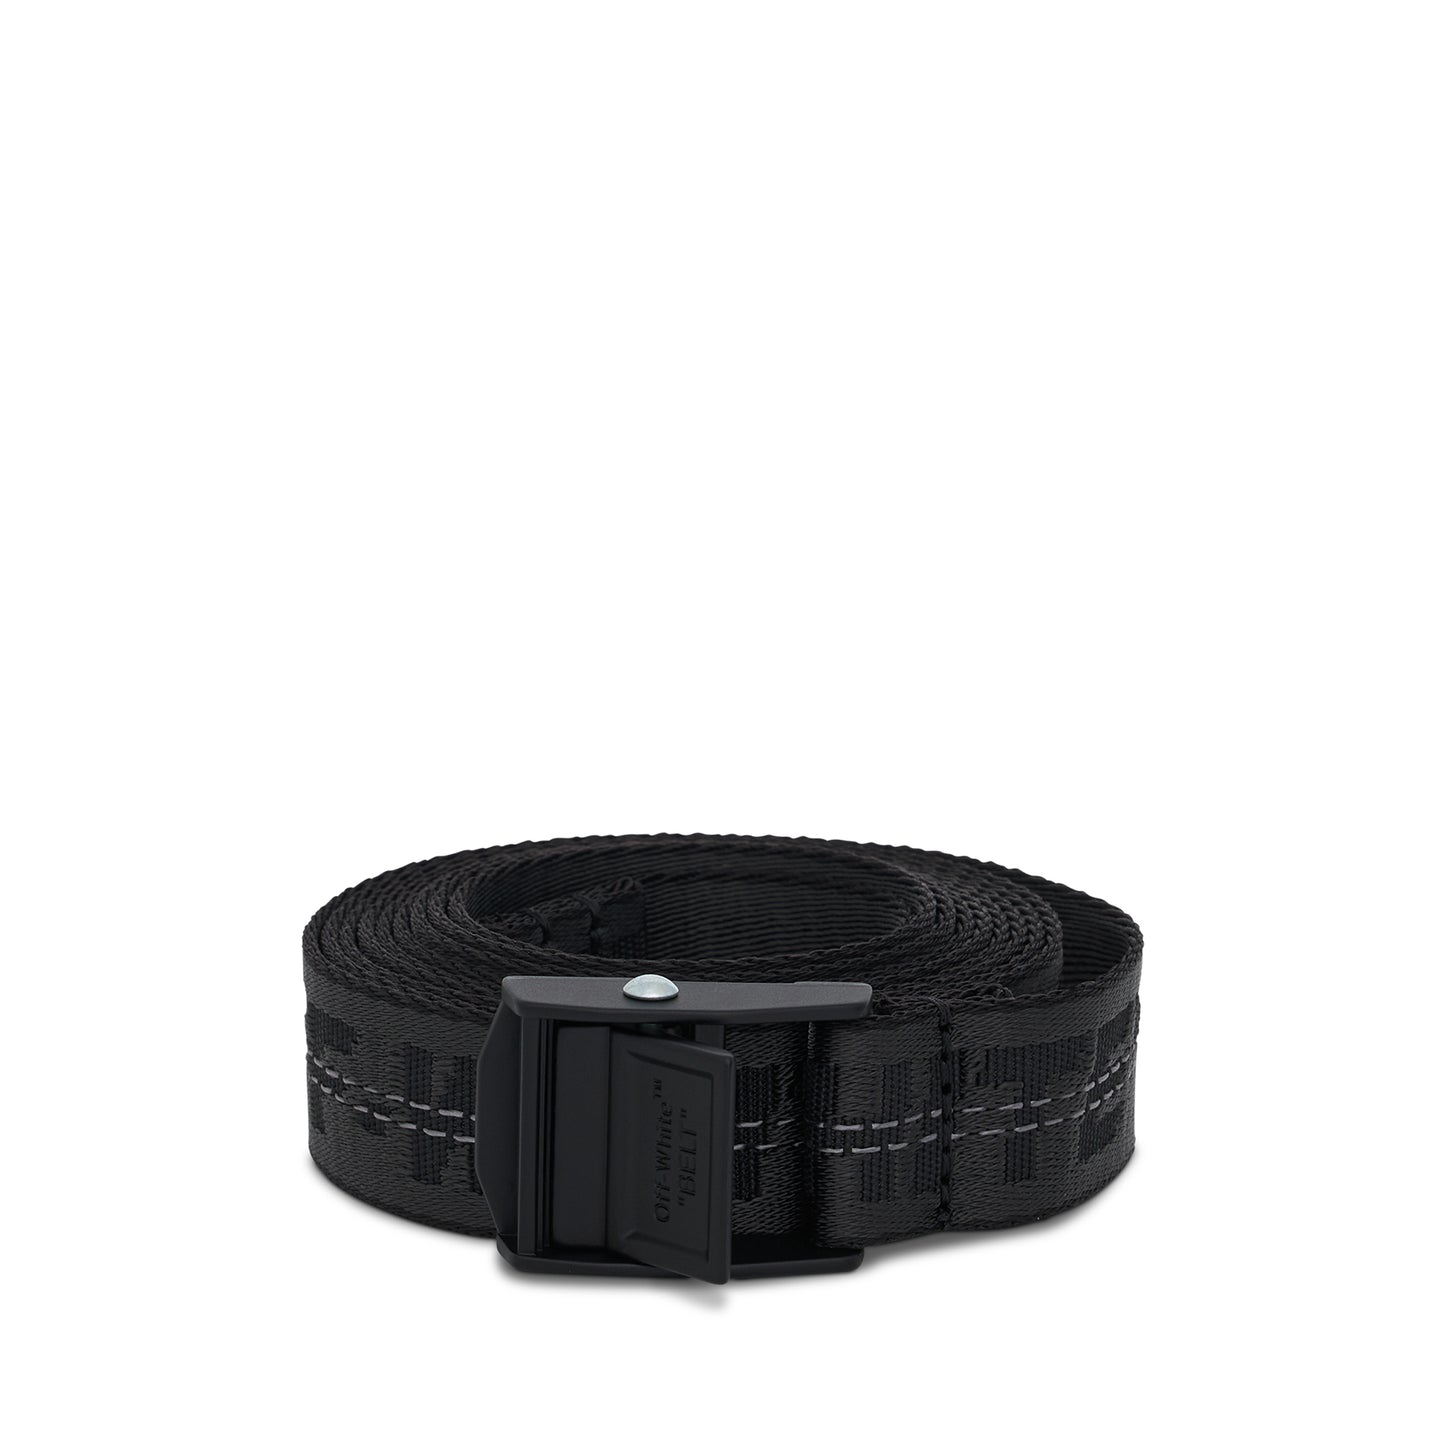 Mini Industrial H25 Belt in Black/Black